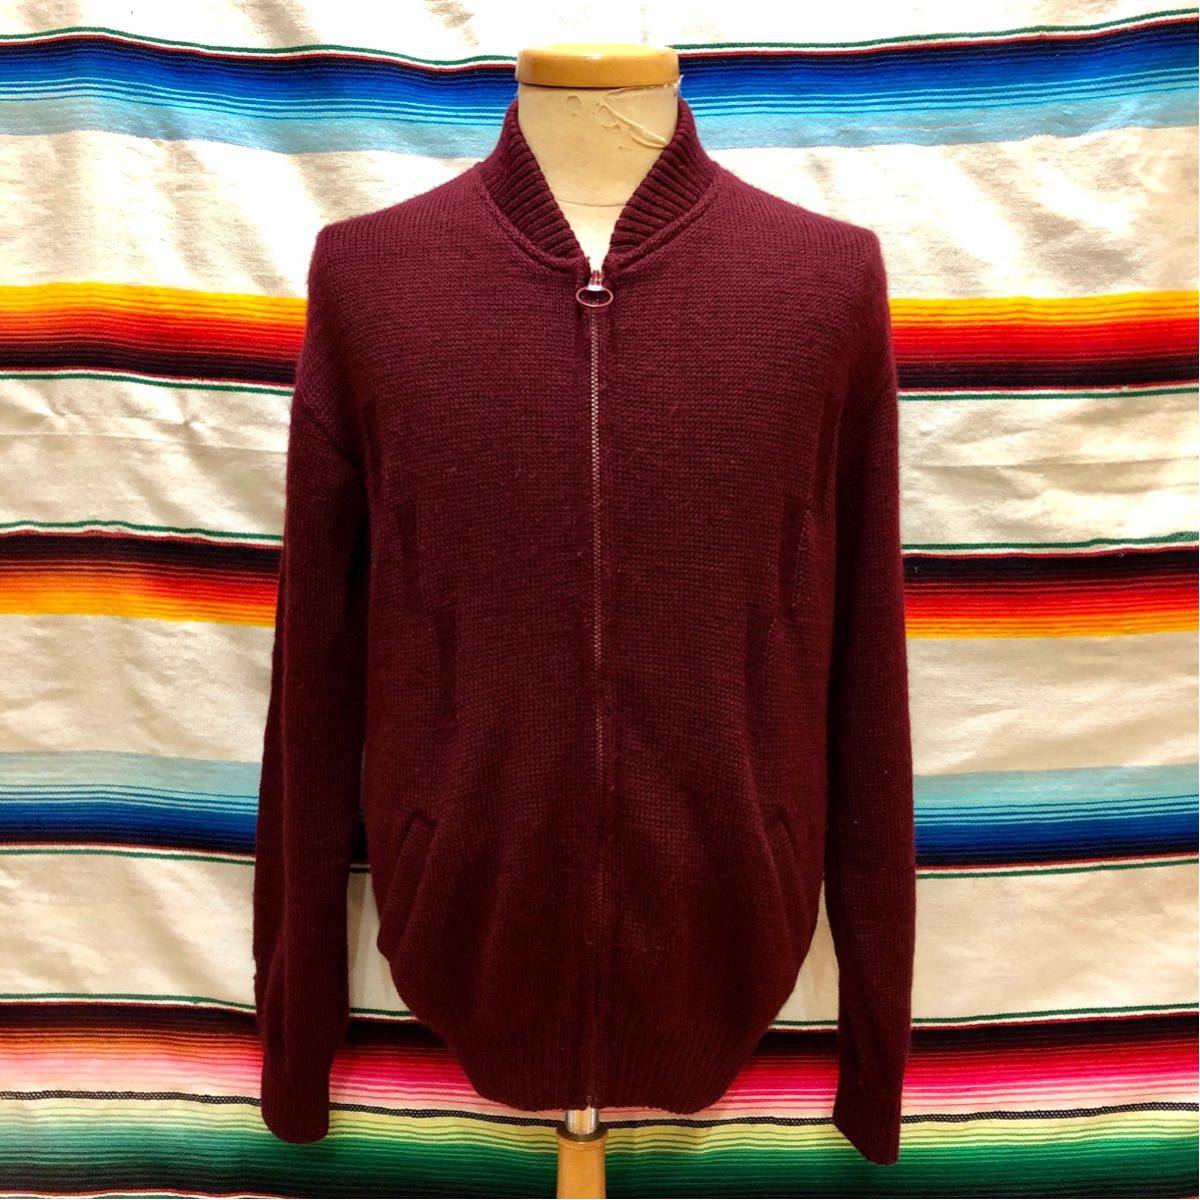 70*s Silver Arrow шерсть Zip выше свитер поиск : б/у одежда б/у одежда свитер б/у одежда вязаный retro Japan Vintage 70 годы wool